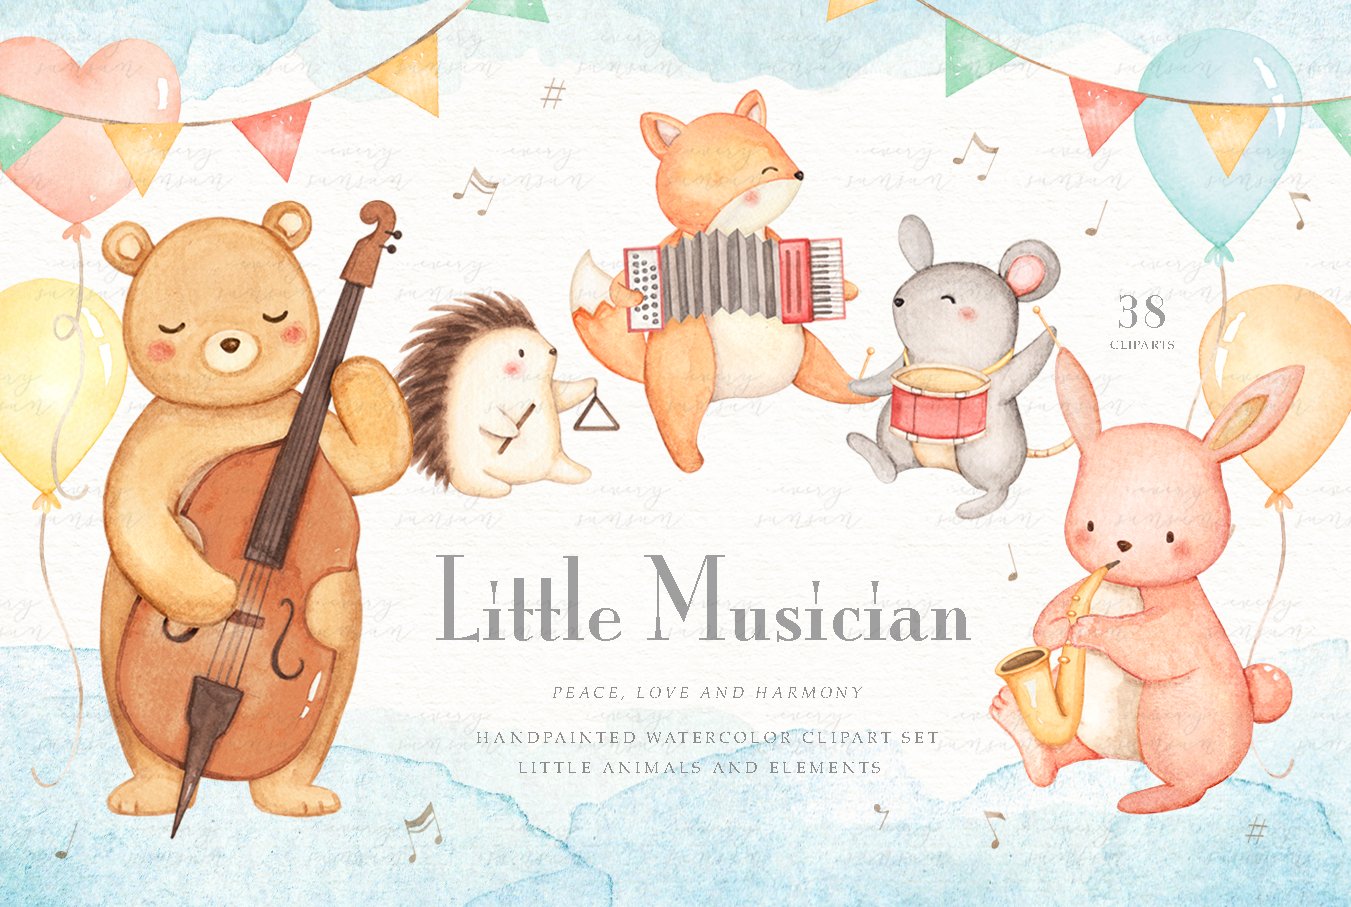 Little Musician Watercolor Clip Arts cover image.